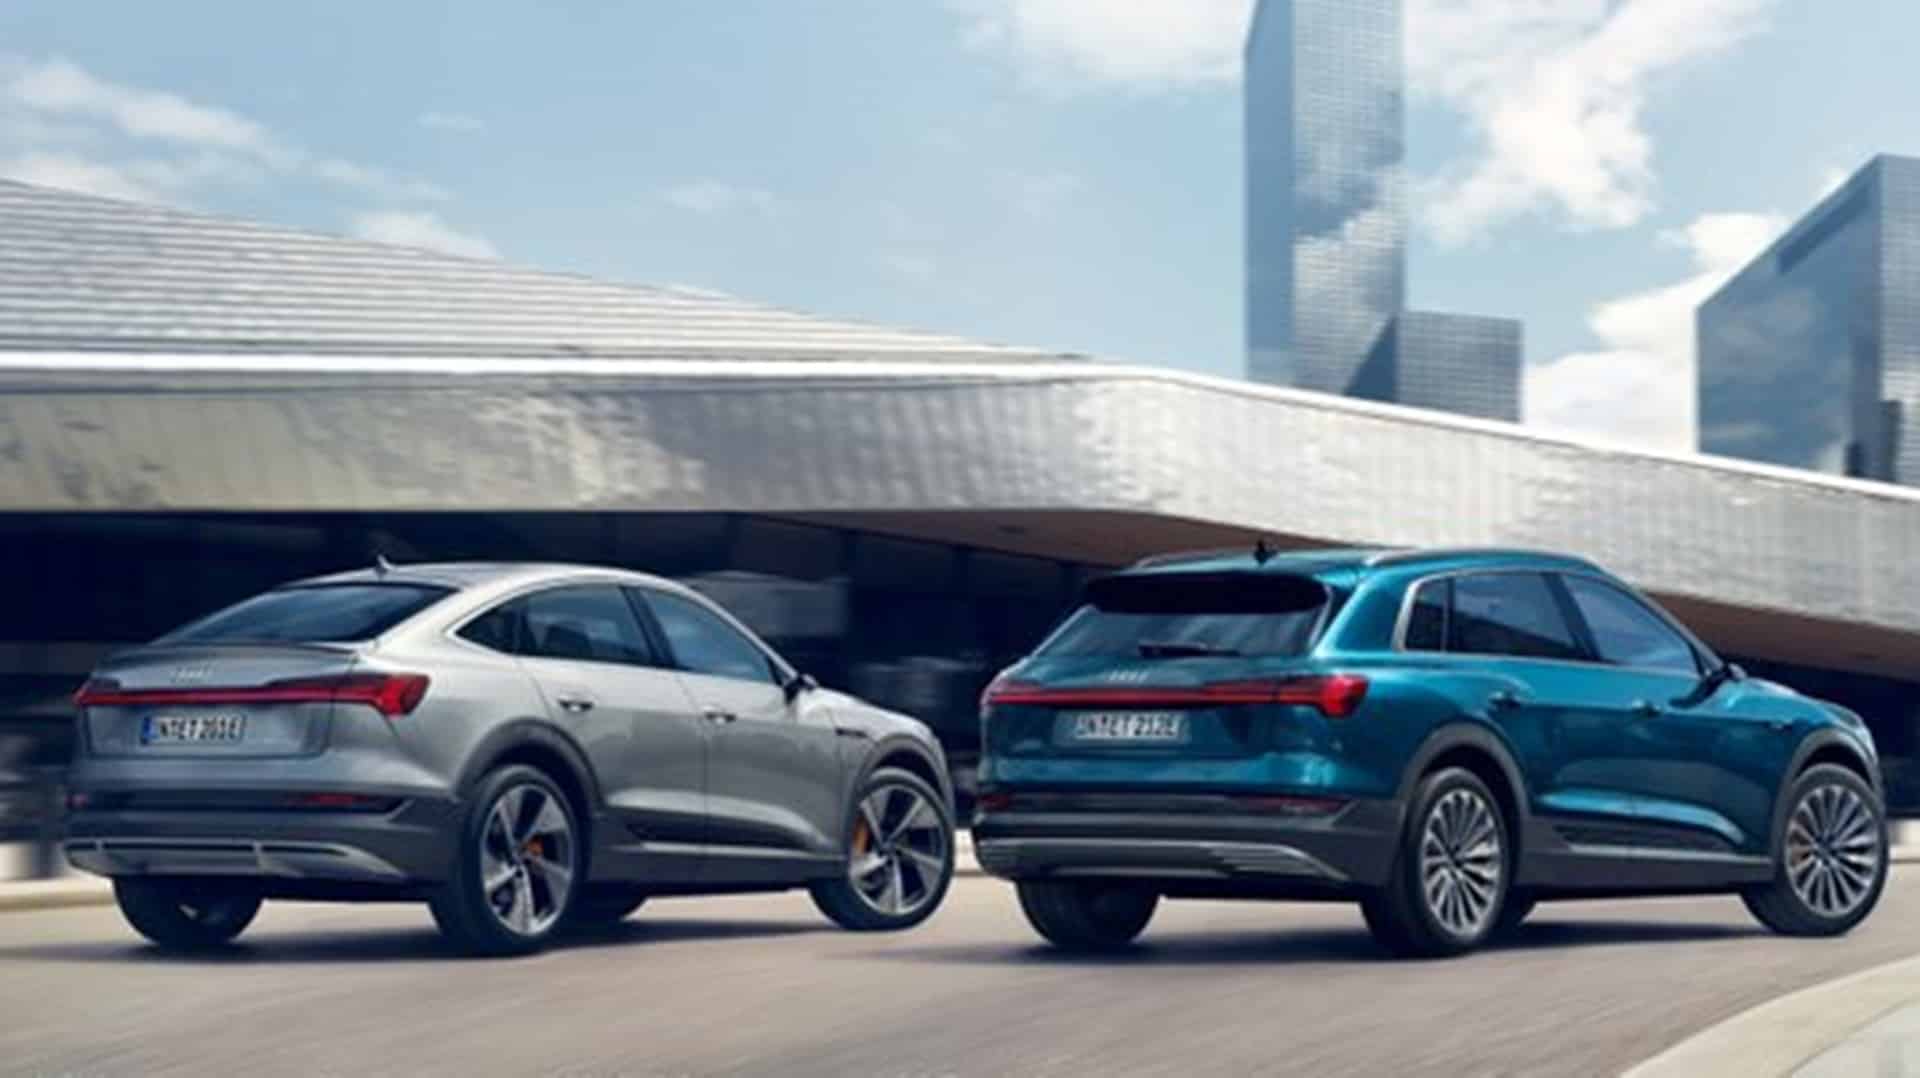 Audi launches 3 all-electric SUVs under its e-tron range; check details